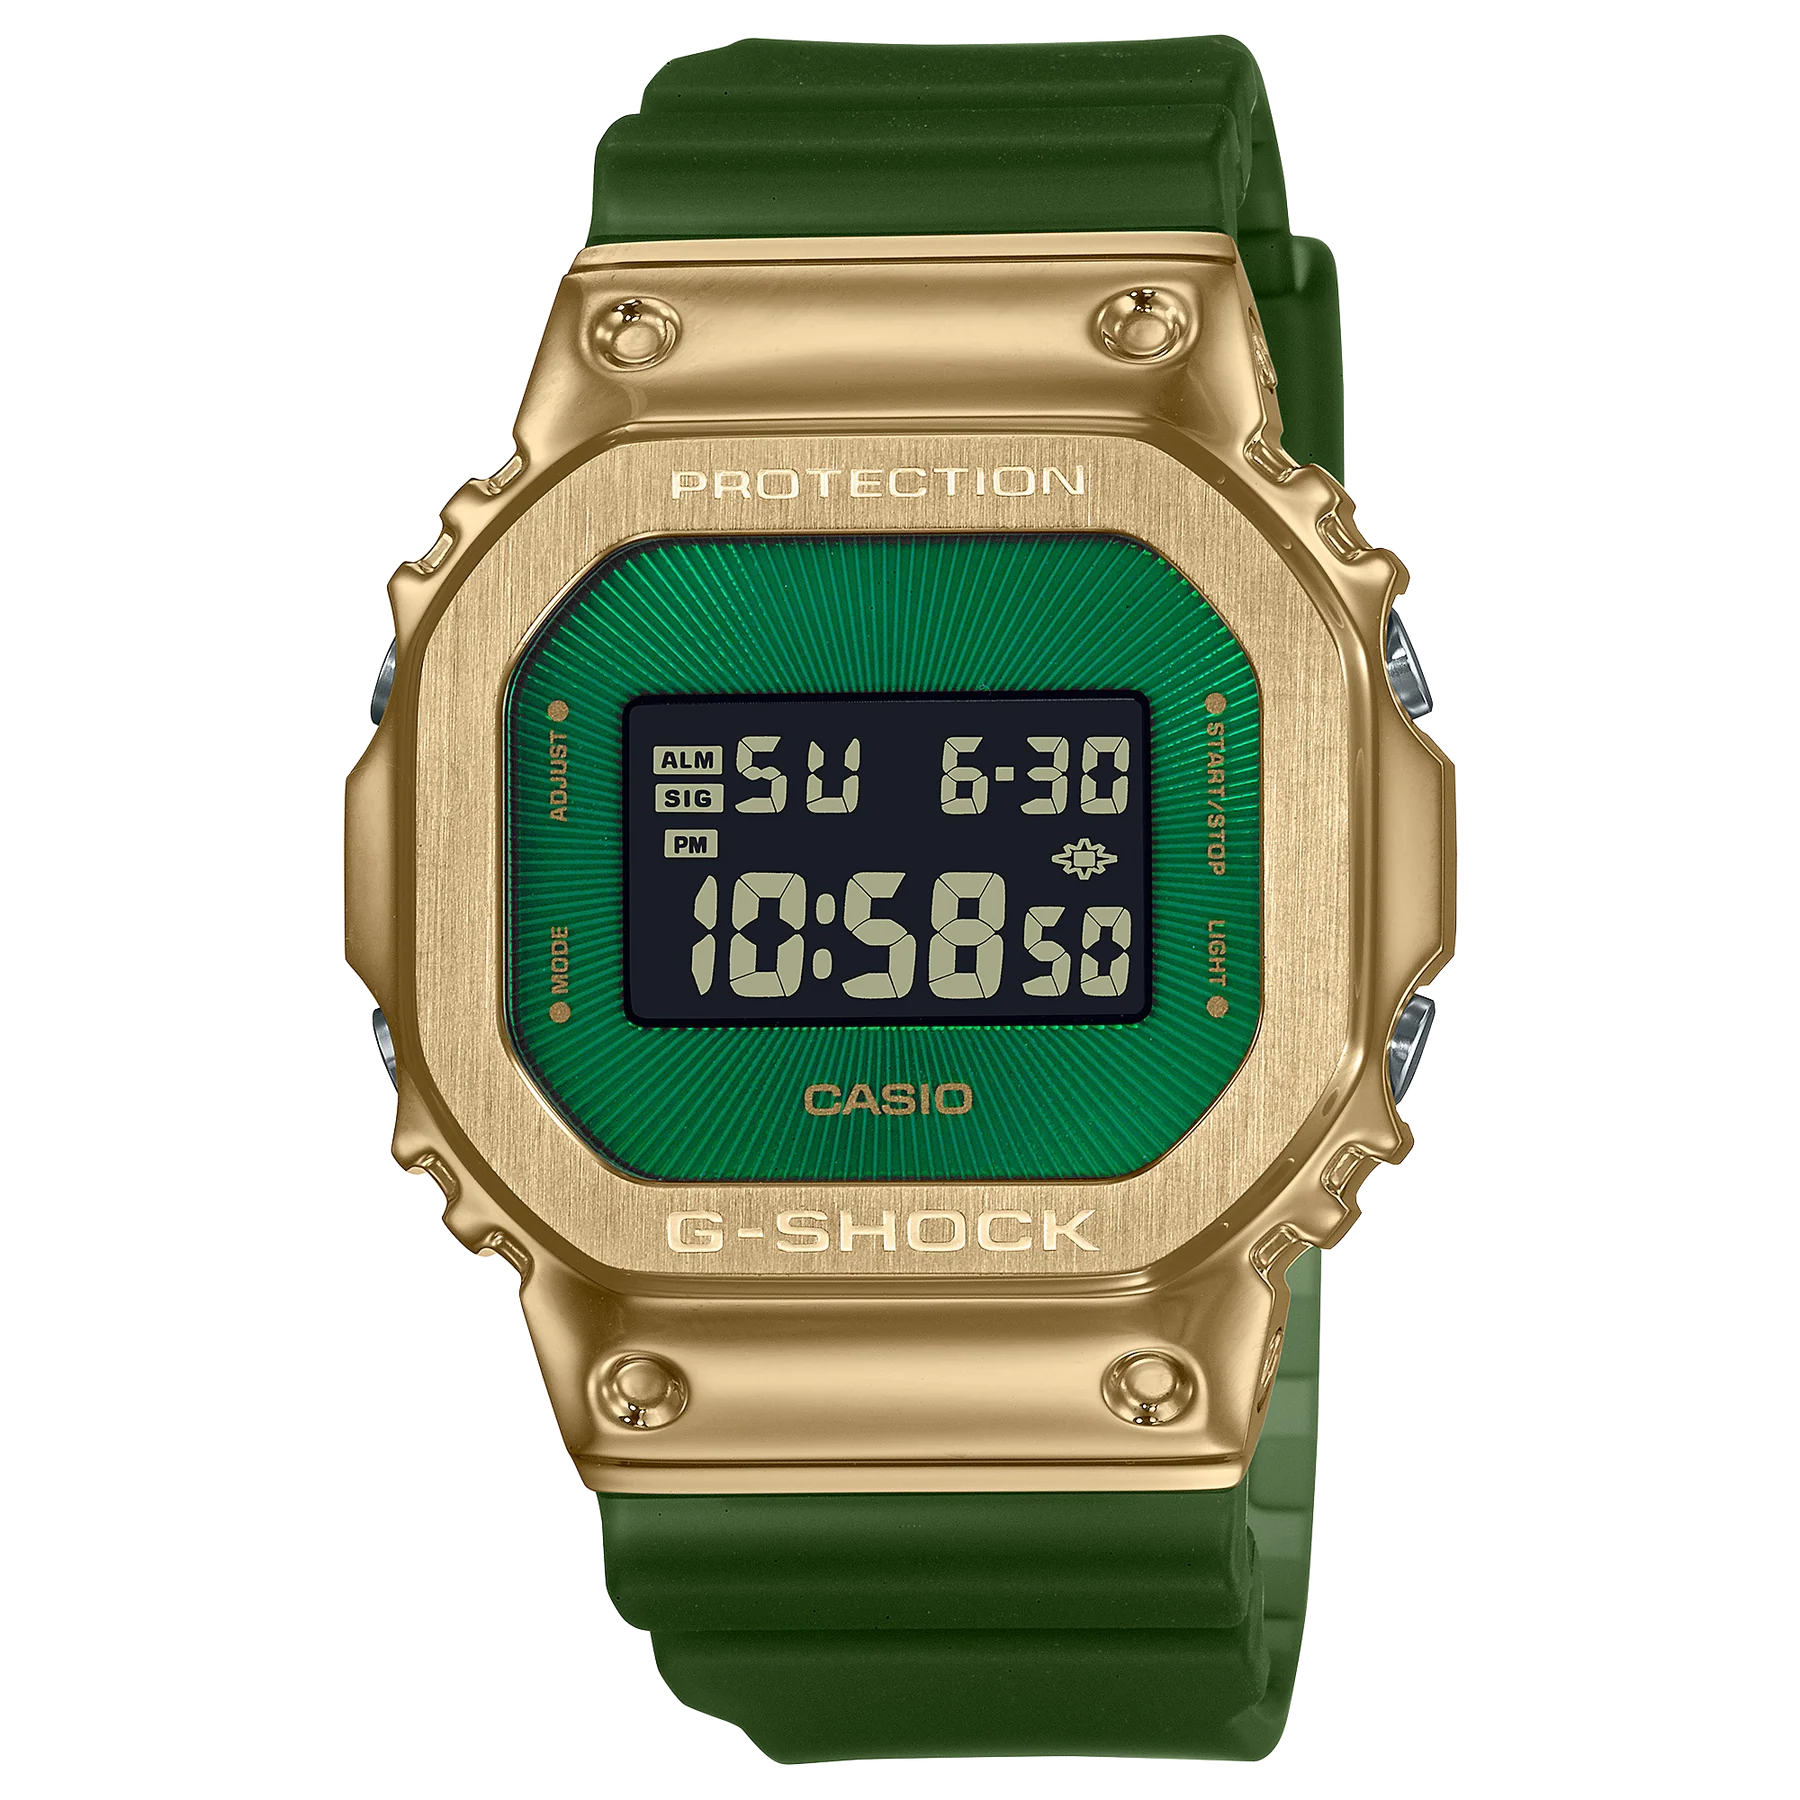 Casio G-Shock GM-5600 Lineup Translucent Green Resin Band Watch GM5600CL-3D GM-5600CL-3D GM-5600CL-3